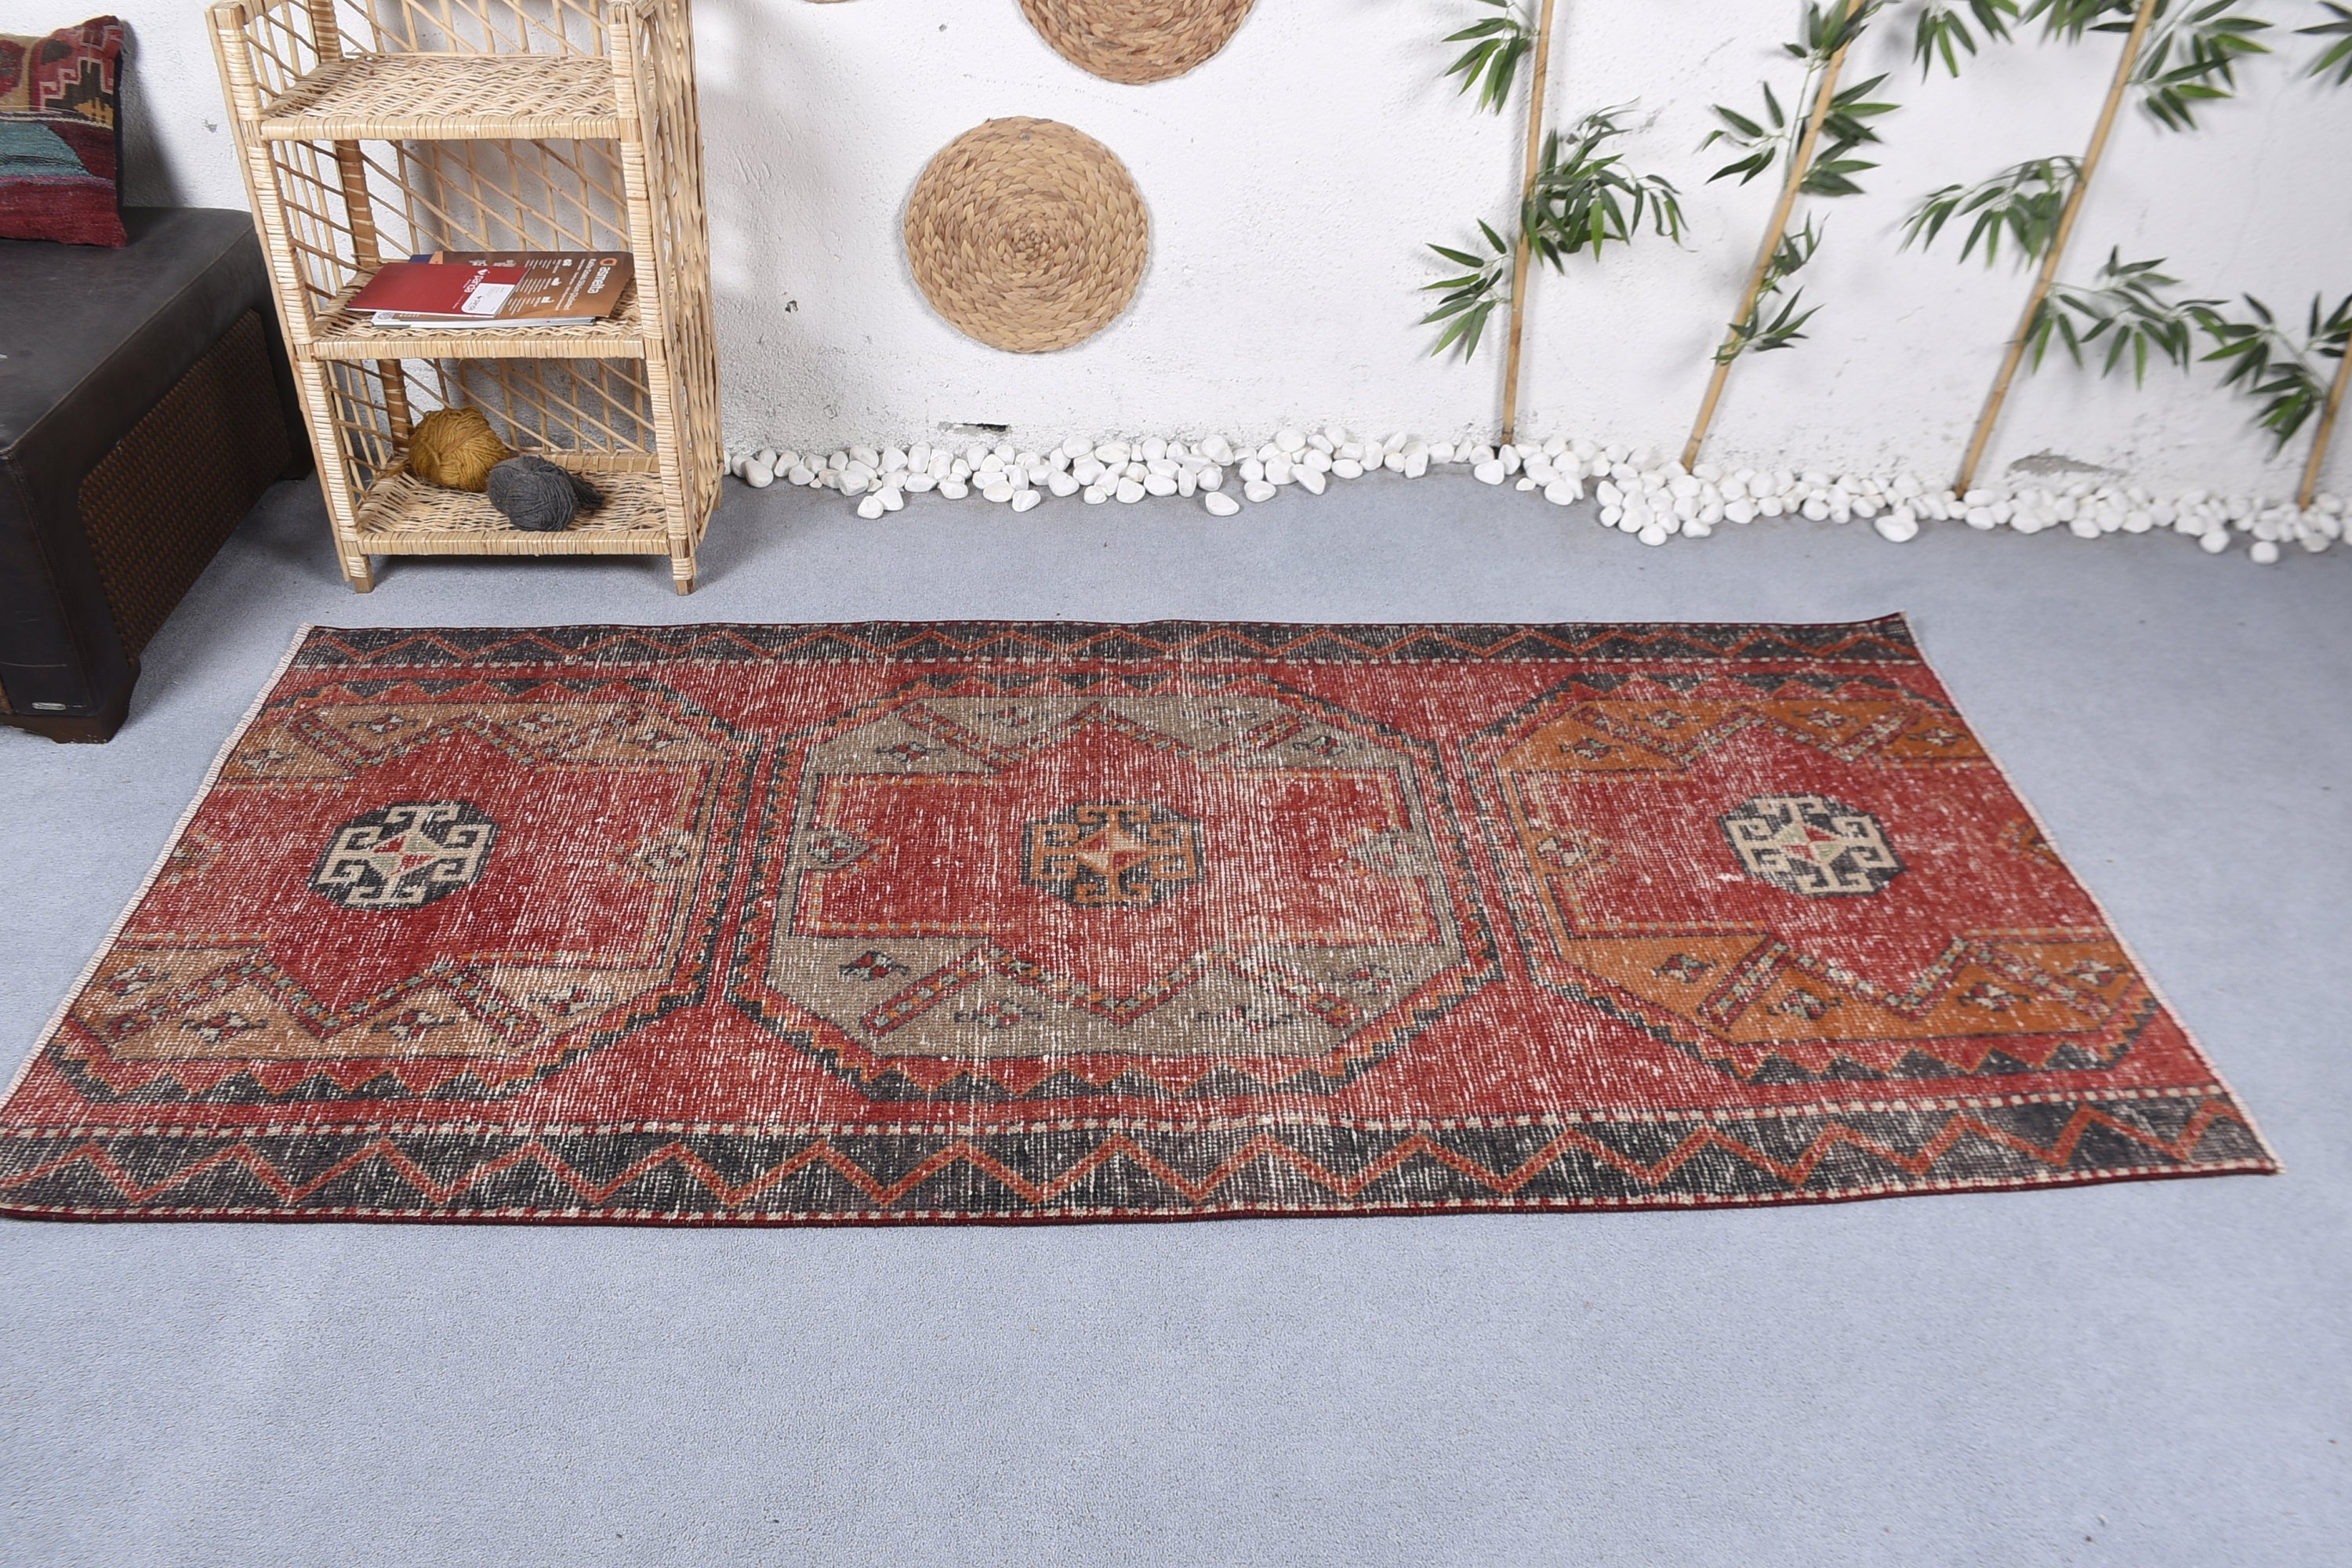 Floor Rug, Vintage Rug, Turkish Rugs, Bedroom Rug, Rugs for Kitchen, Vintage Decor Rugs, Red Floor Rug, 3.5x7.4 ft Area Rug